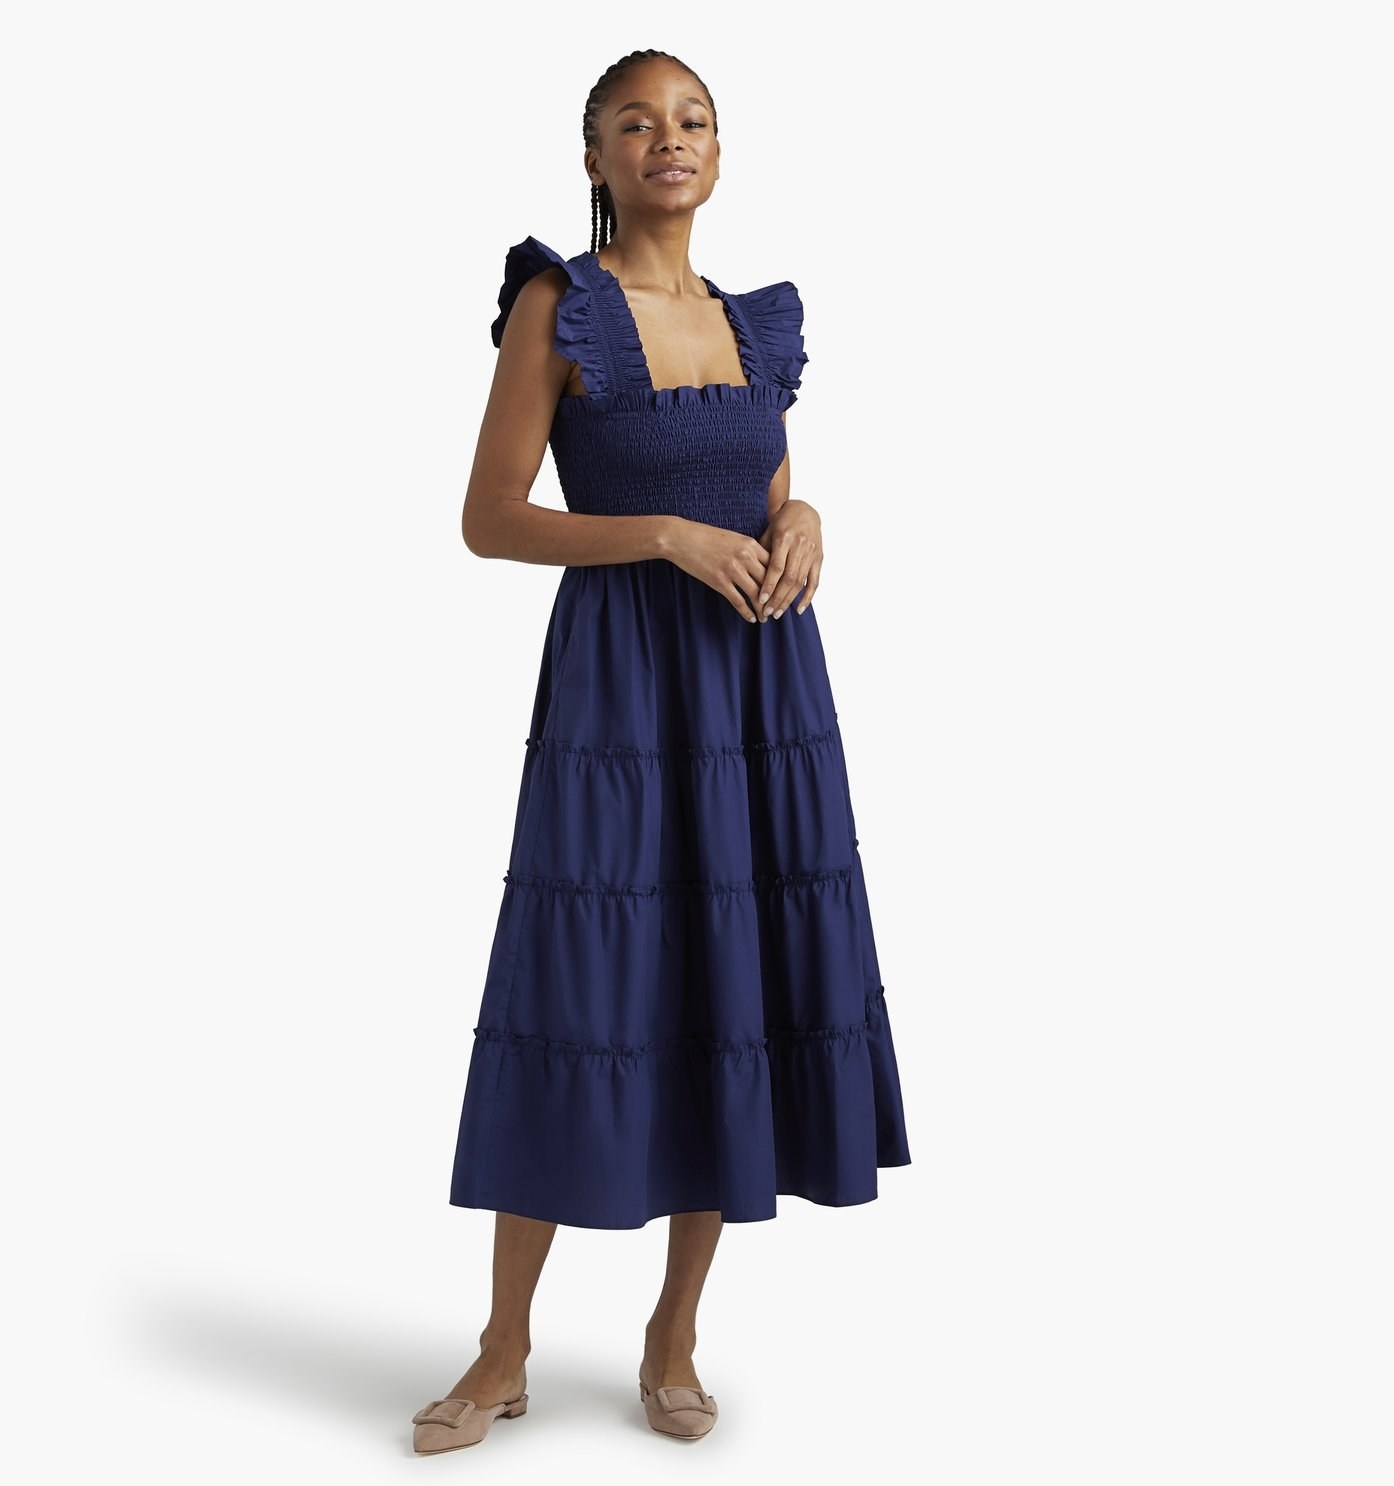 model wearing a navy blue nap dress